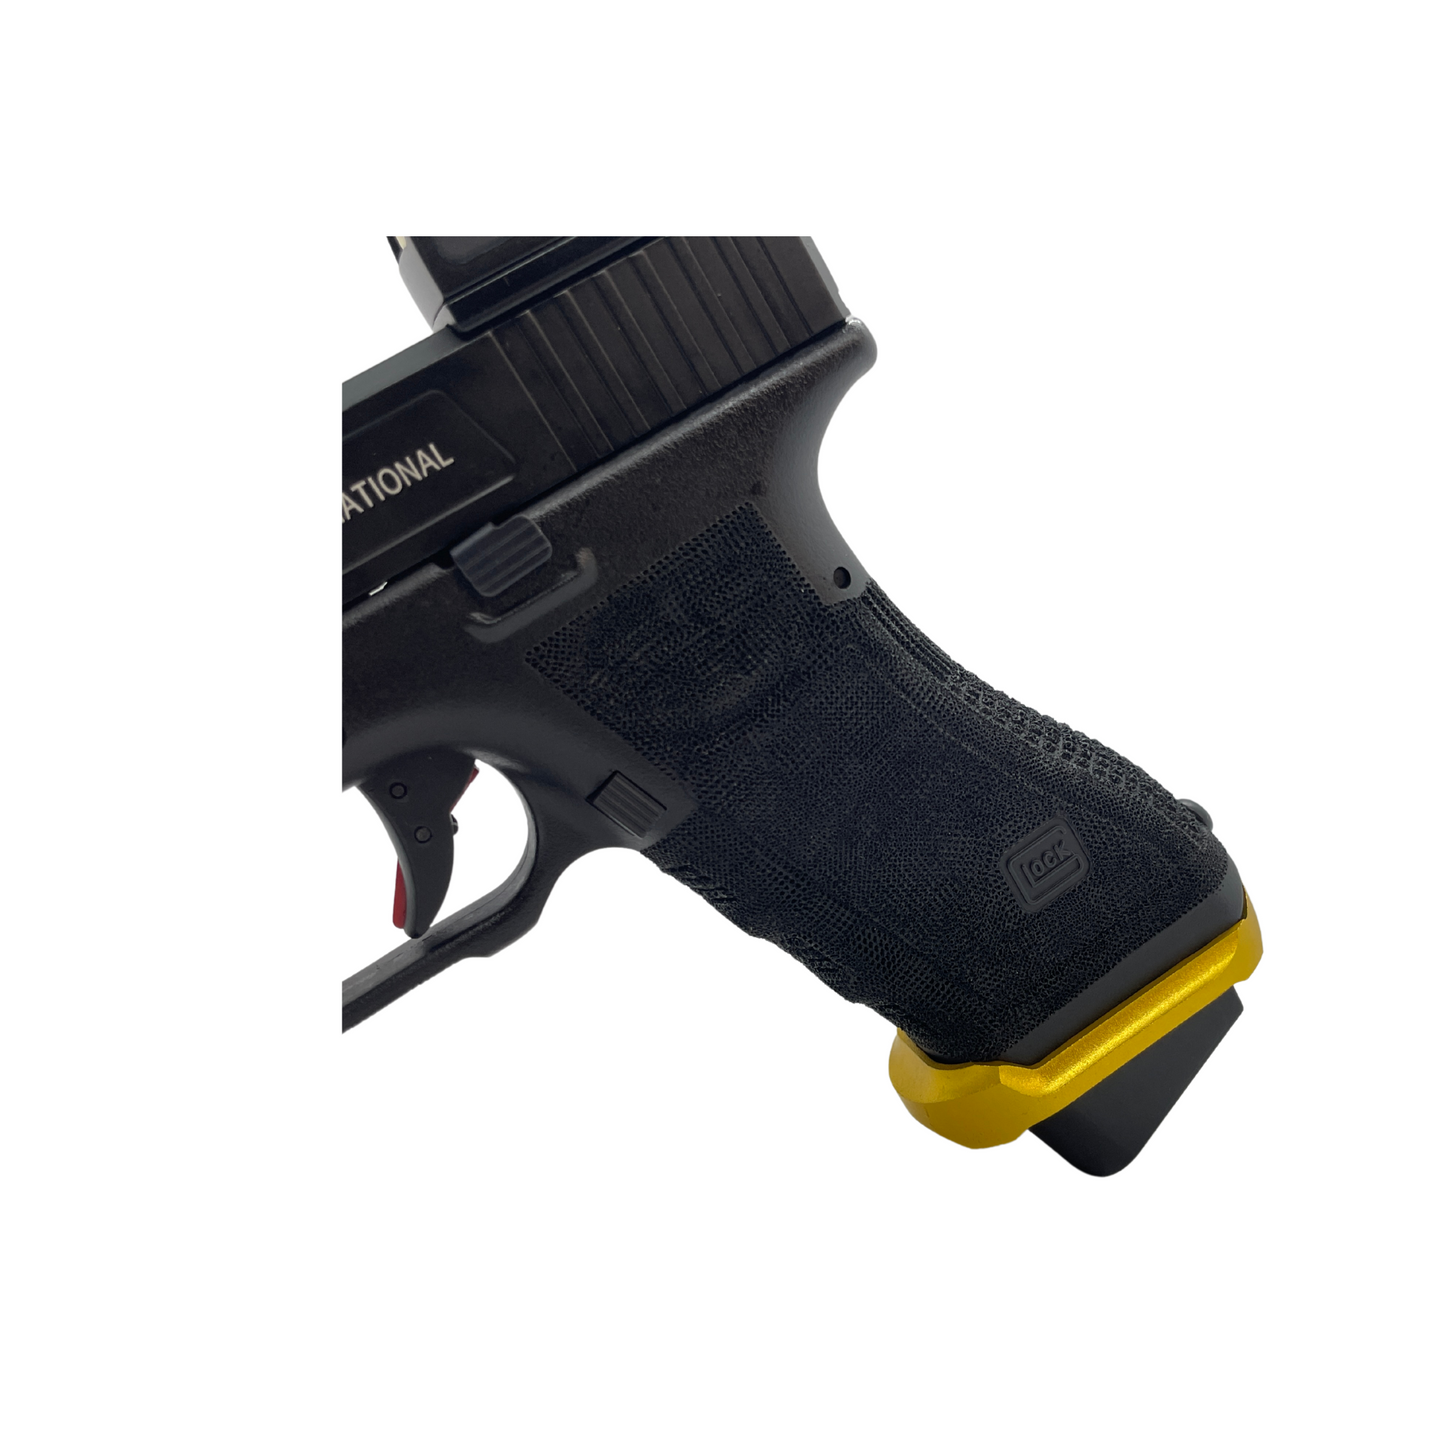 G17 "Salient" Custom Competition Pistol - Gel Blaster